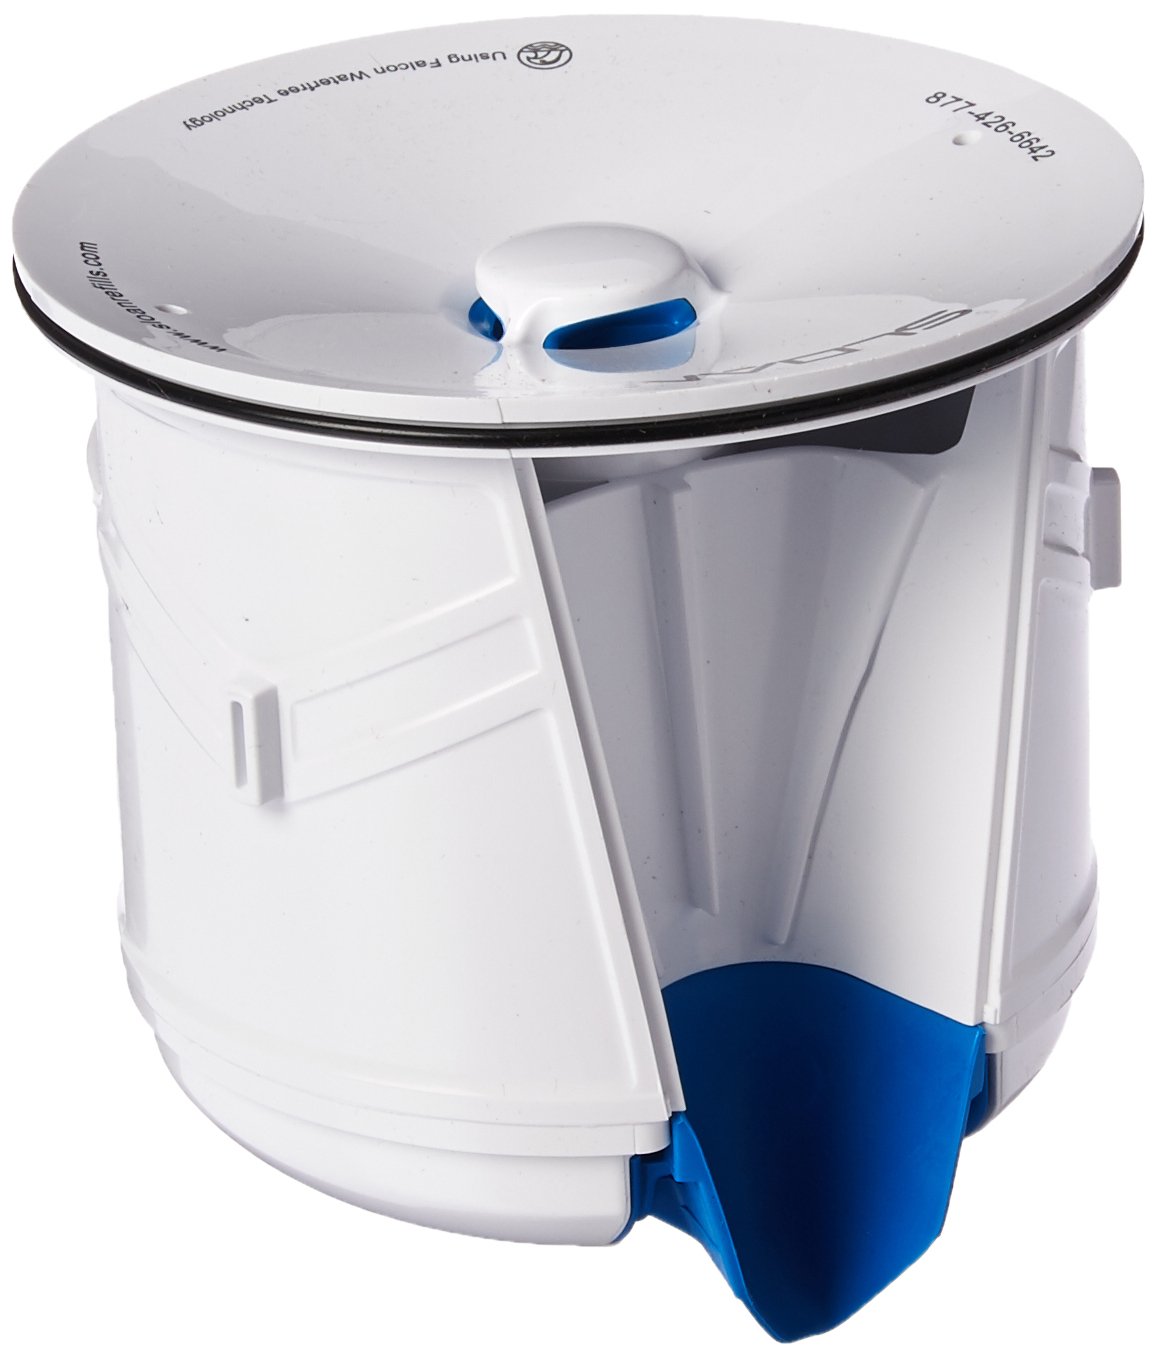 Sloan WES-150 WaterFree Urinal, Hybrid Urinal Cartridge Compatible with All Sloan Waterfree Urinals | Includes Cartridge, Wrench Key, Disposal Bag and Blue Sealant